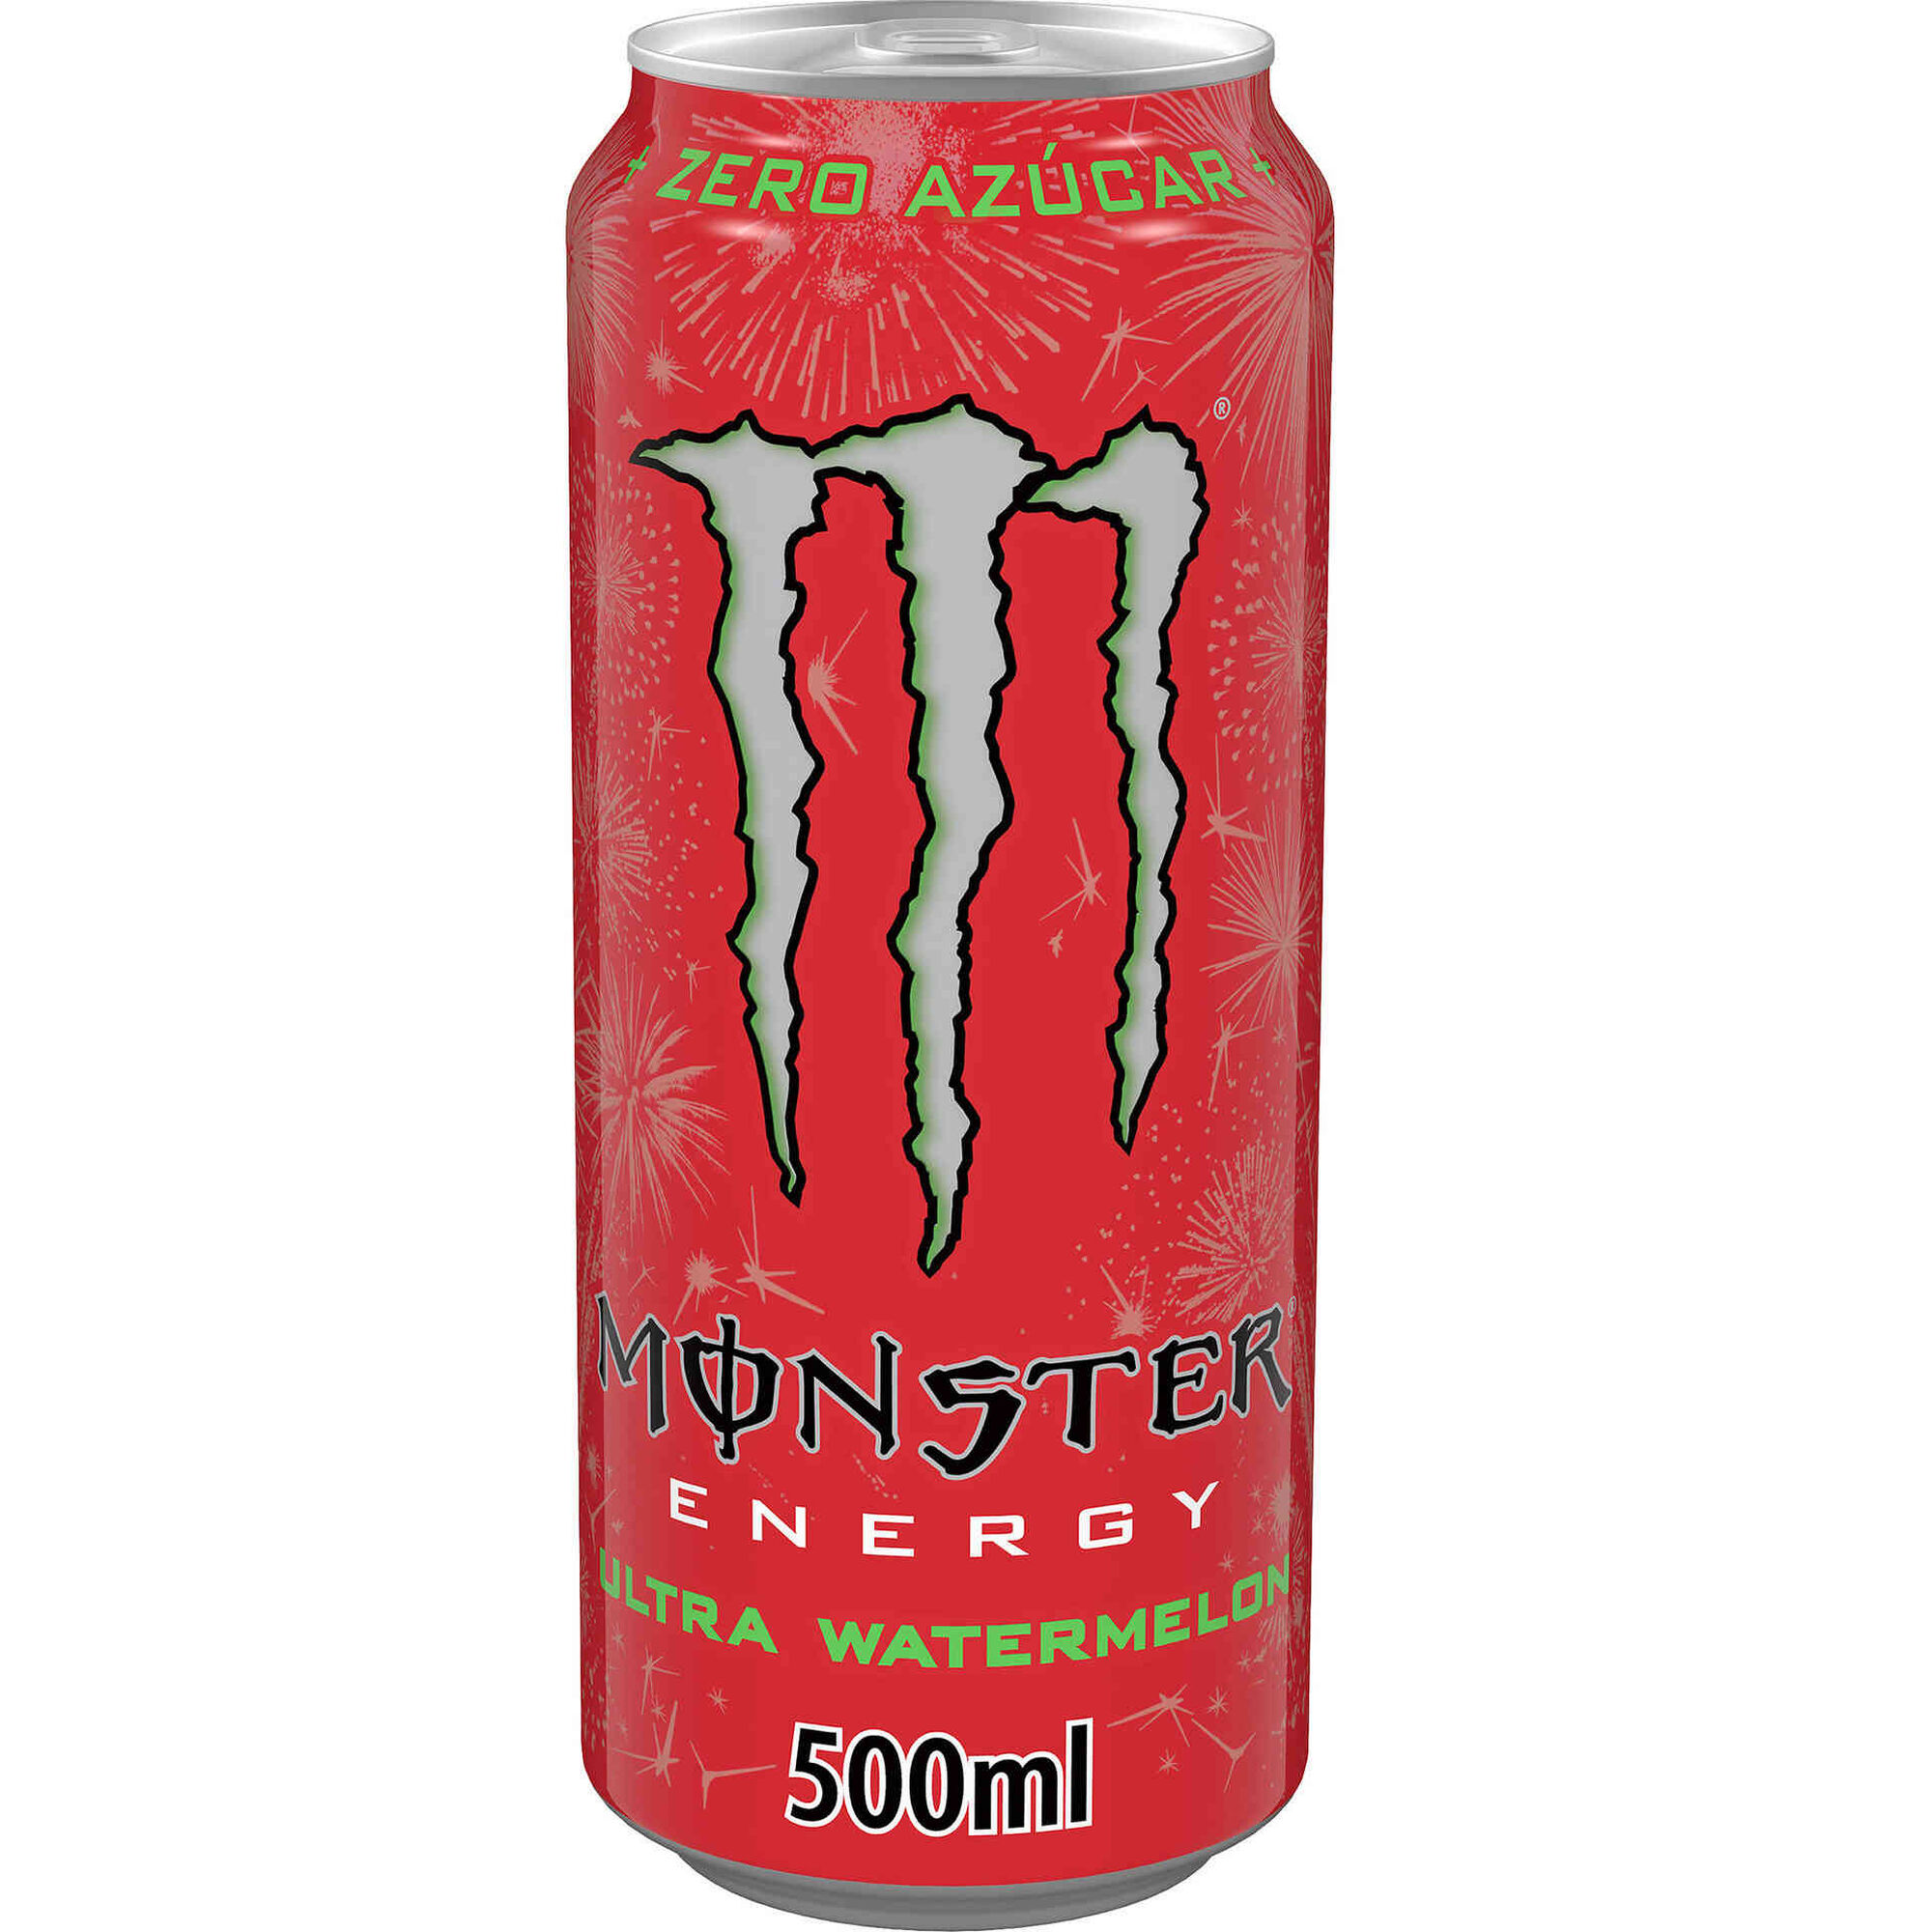 Bebida Energética Ultra Gold sem Açúcar - emb. 50 cl - Monster